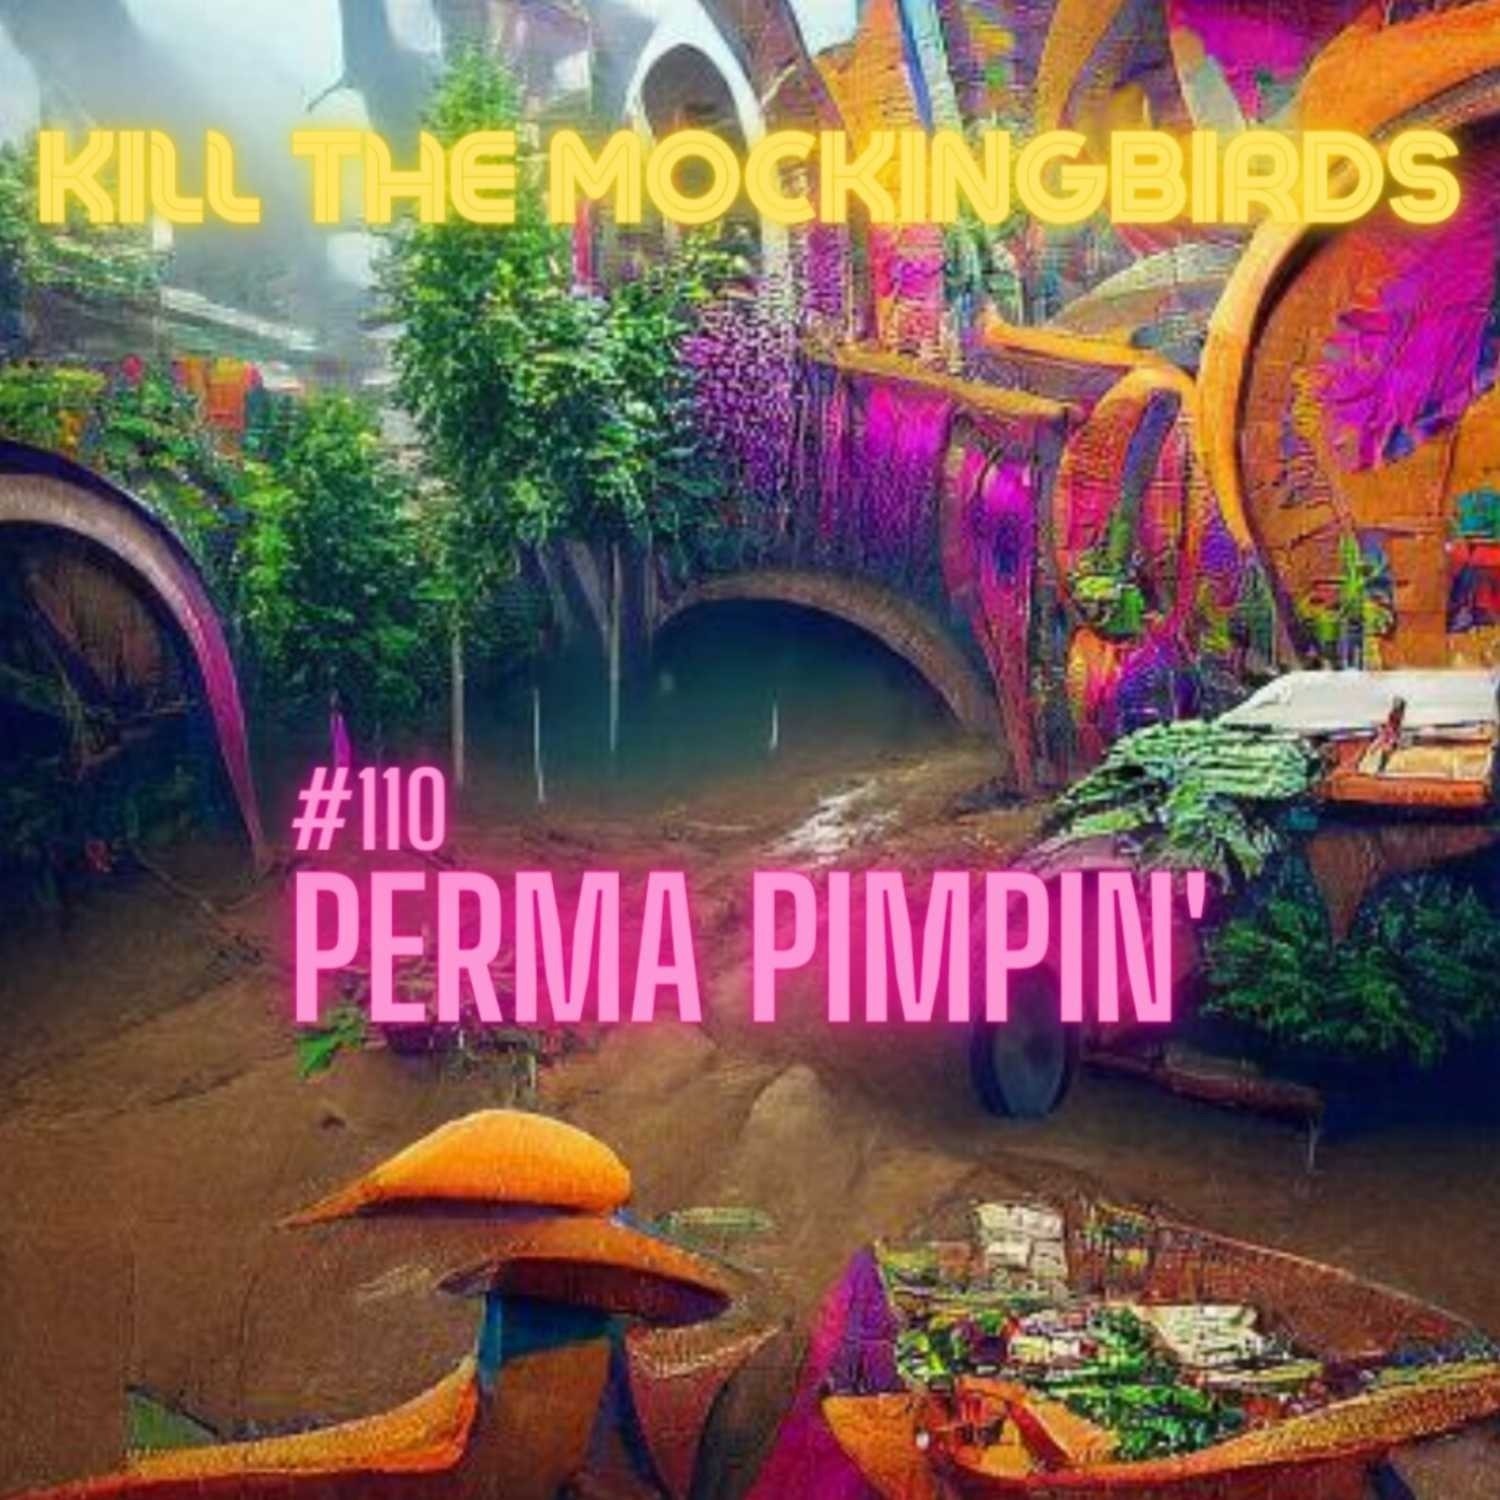 #110 “PERMA PIMPIN” w/ Permaculture P.I.M.P.Cast